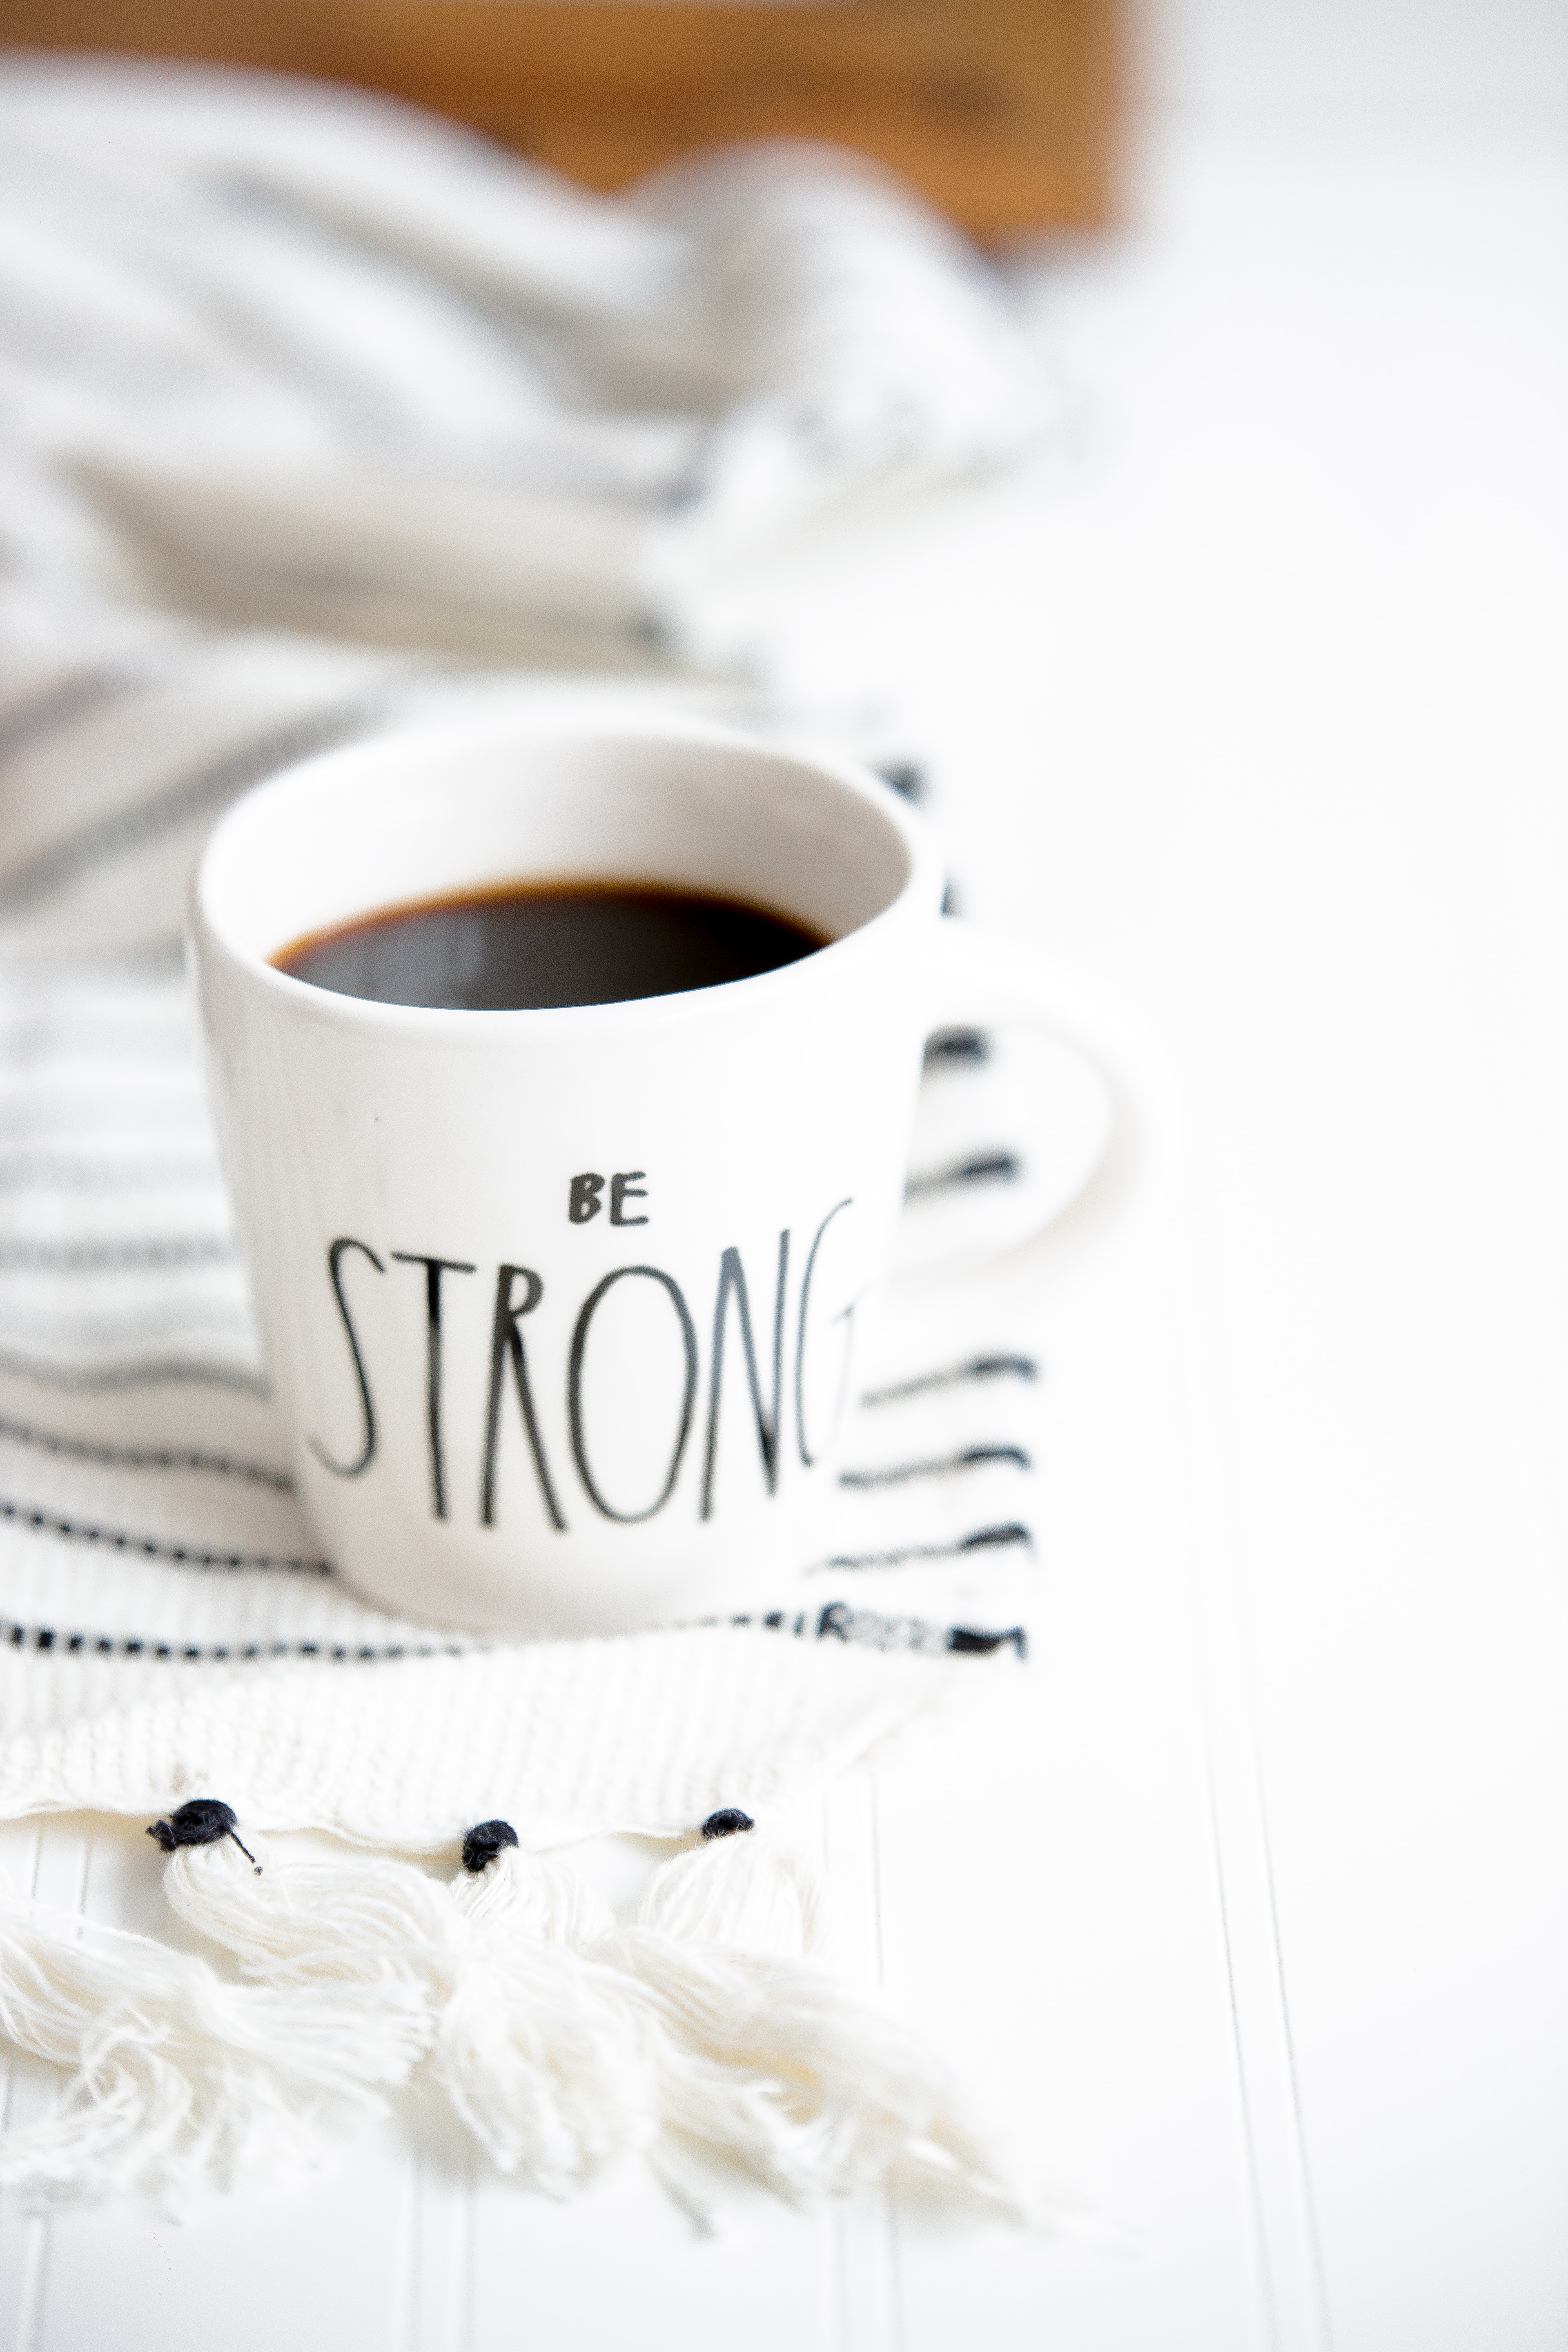 Motivational caption 'Be strong' on a mug